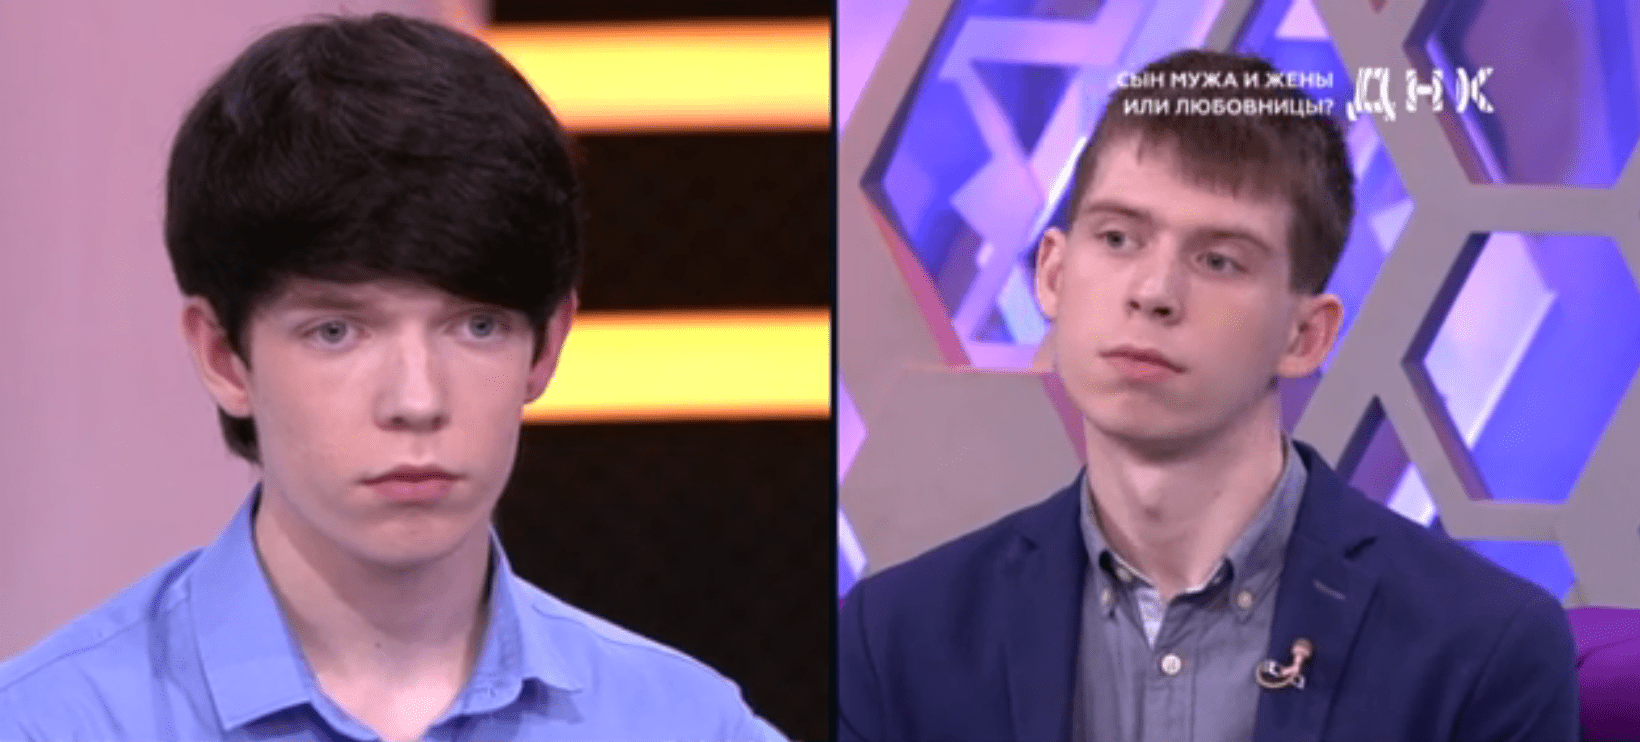 17-летний Давид и 19-летний Иван — братья